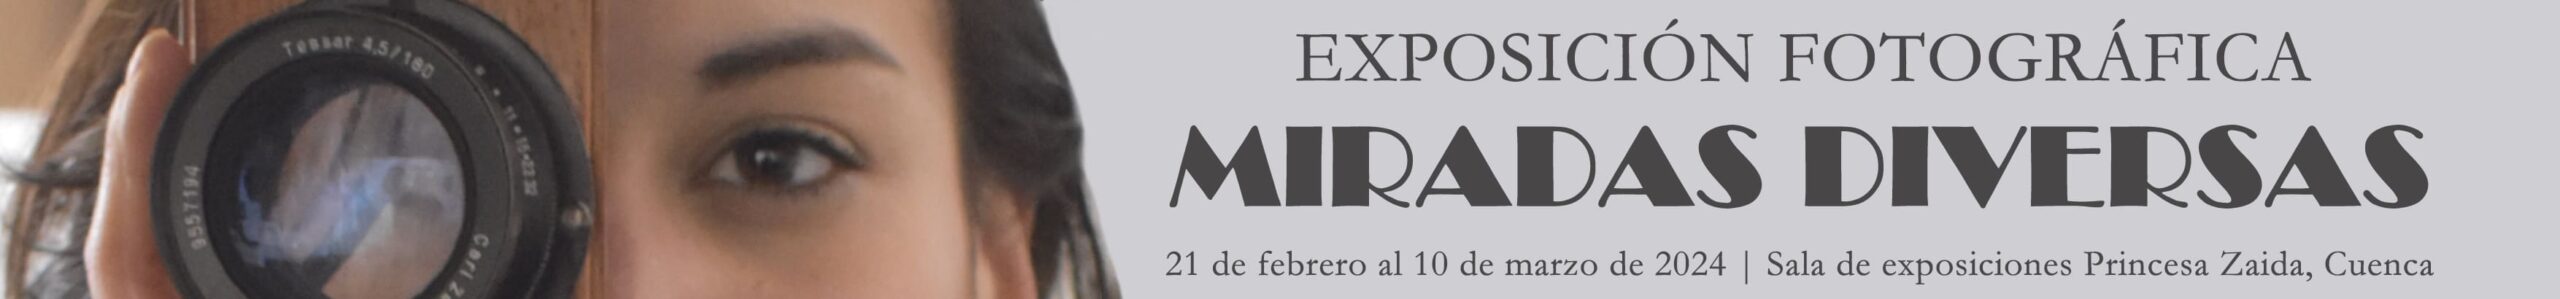 Banner exposición Miradas diversas Iworking Formación Cuenca